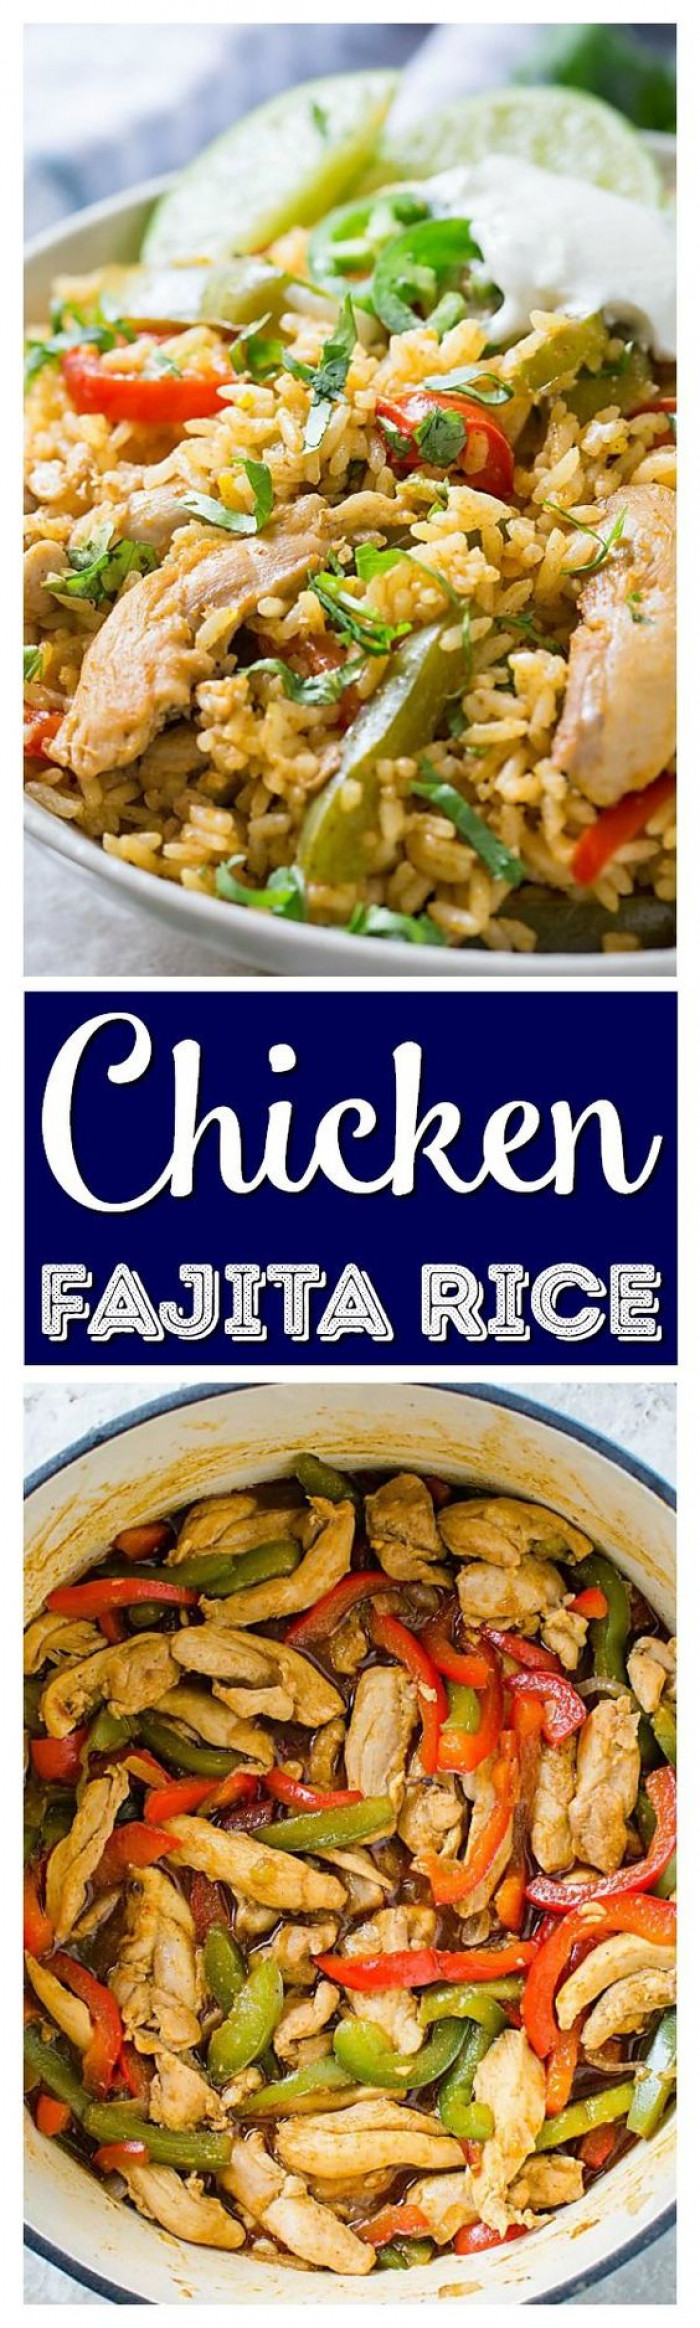 Mexican Inspired Chicken Fajita Rice